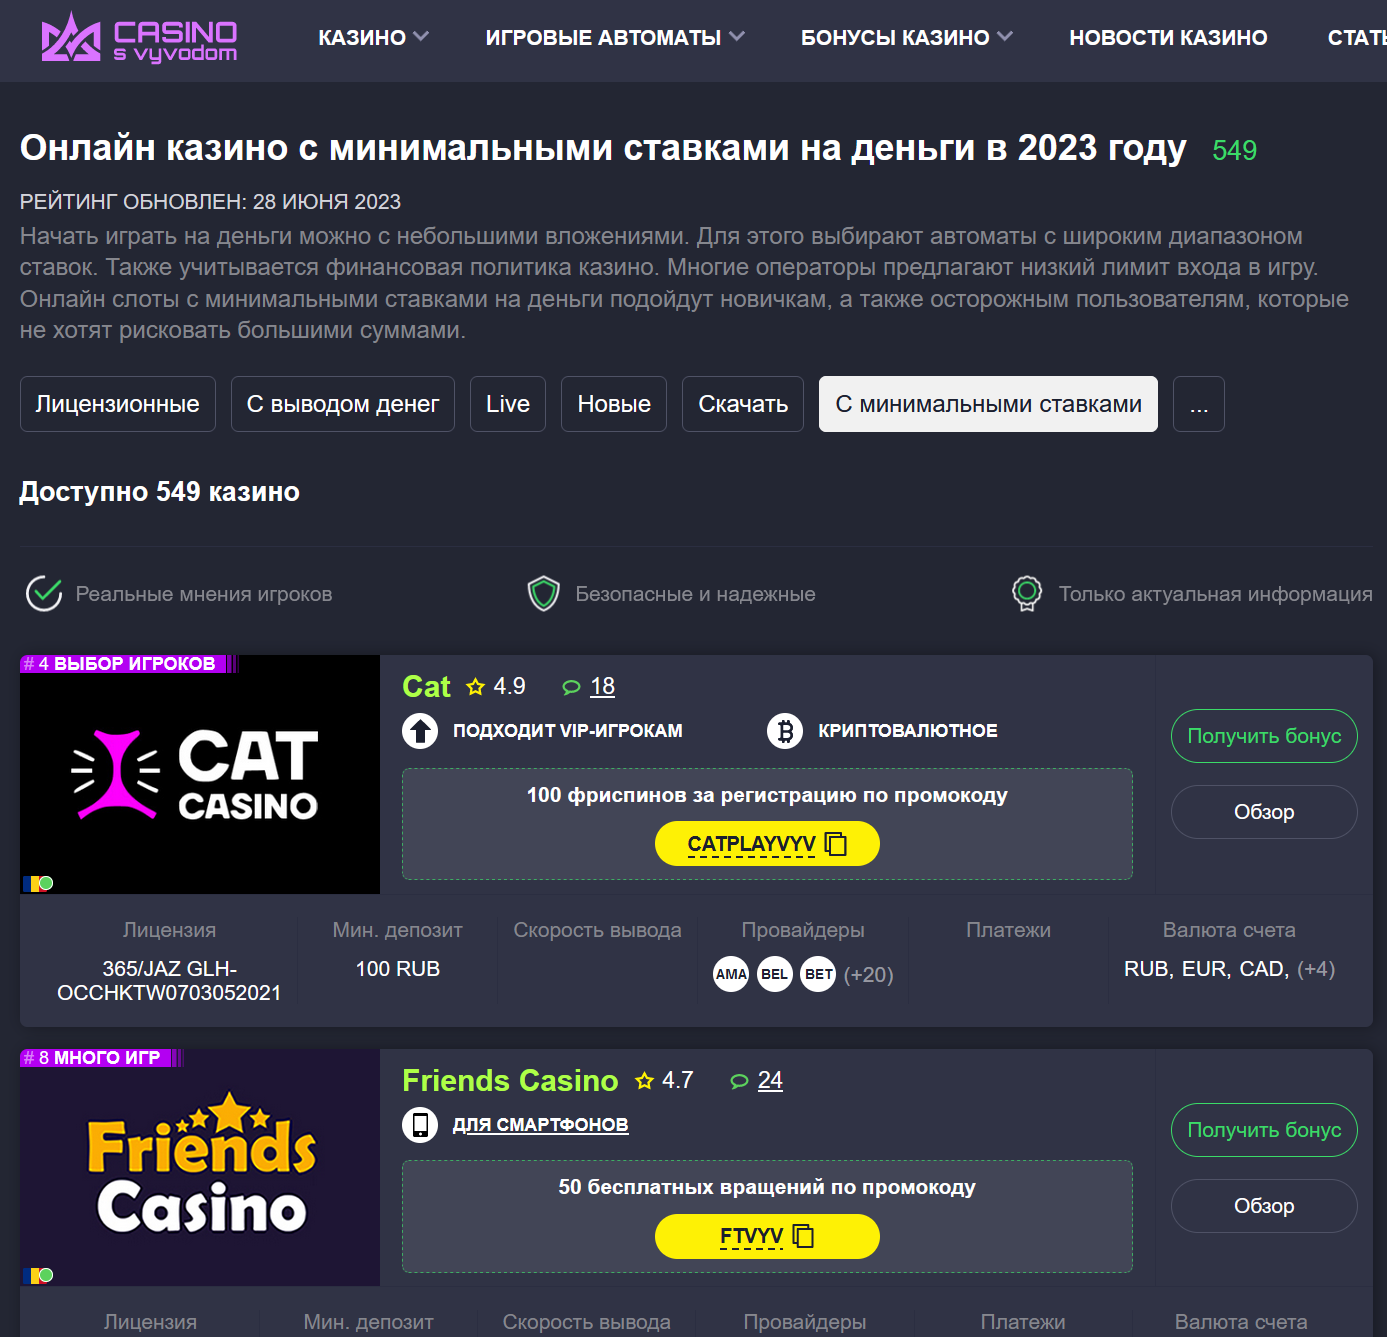 Download Top casinos with minimal bets für Android kostenlos.